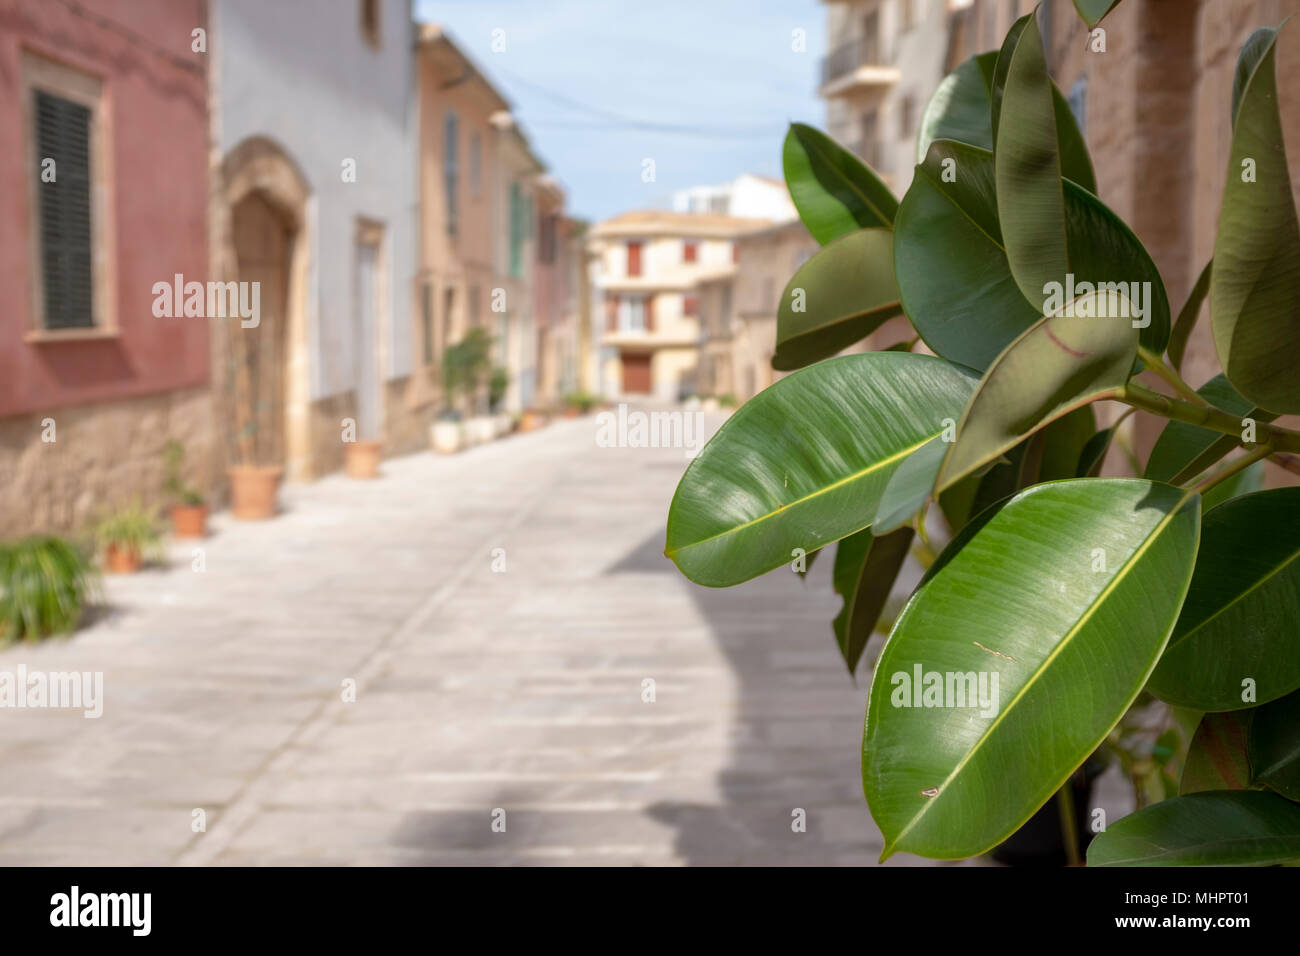 Rubber Plant in a street in Alcudia, Mallorca, Spain. Stock Photo